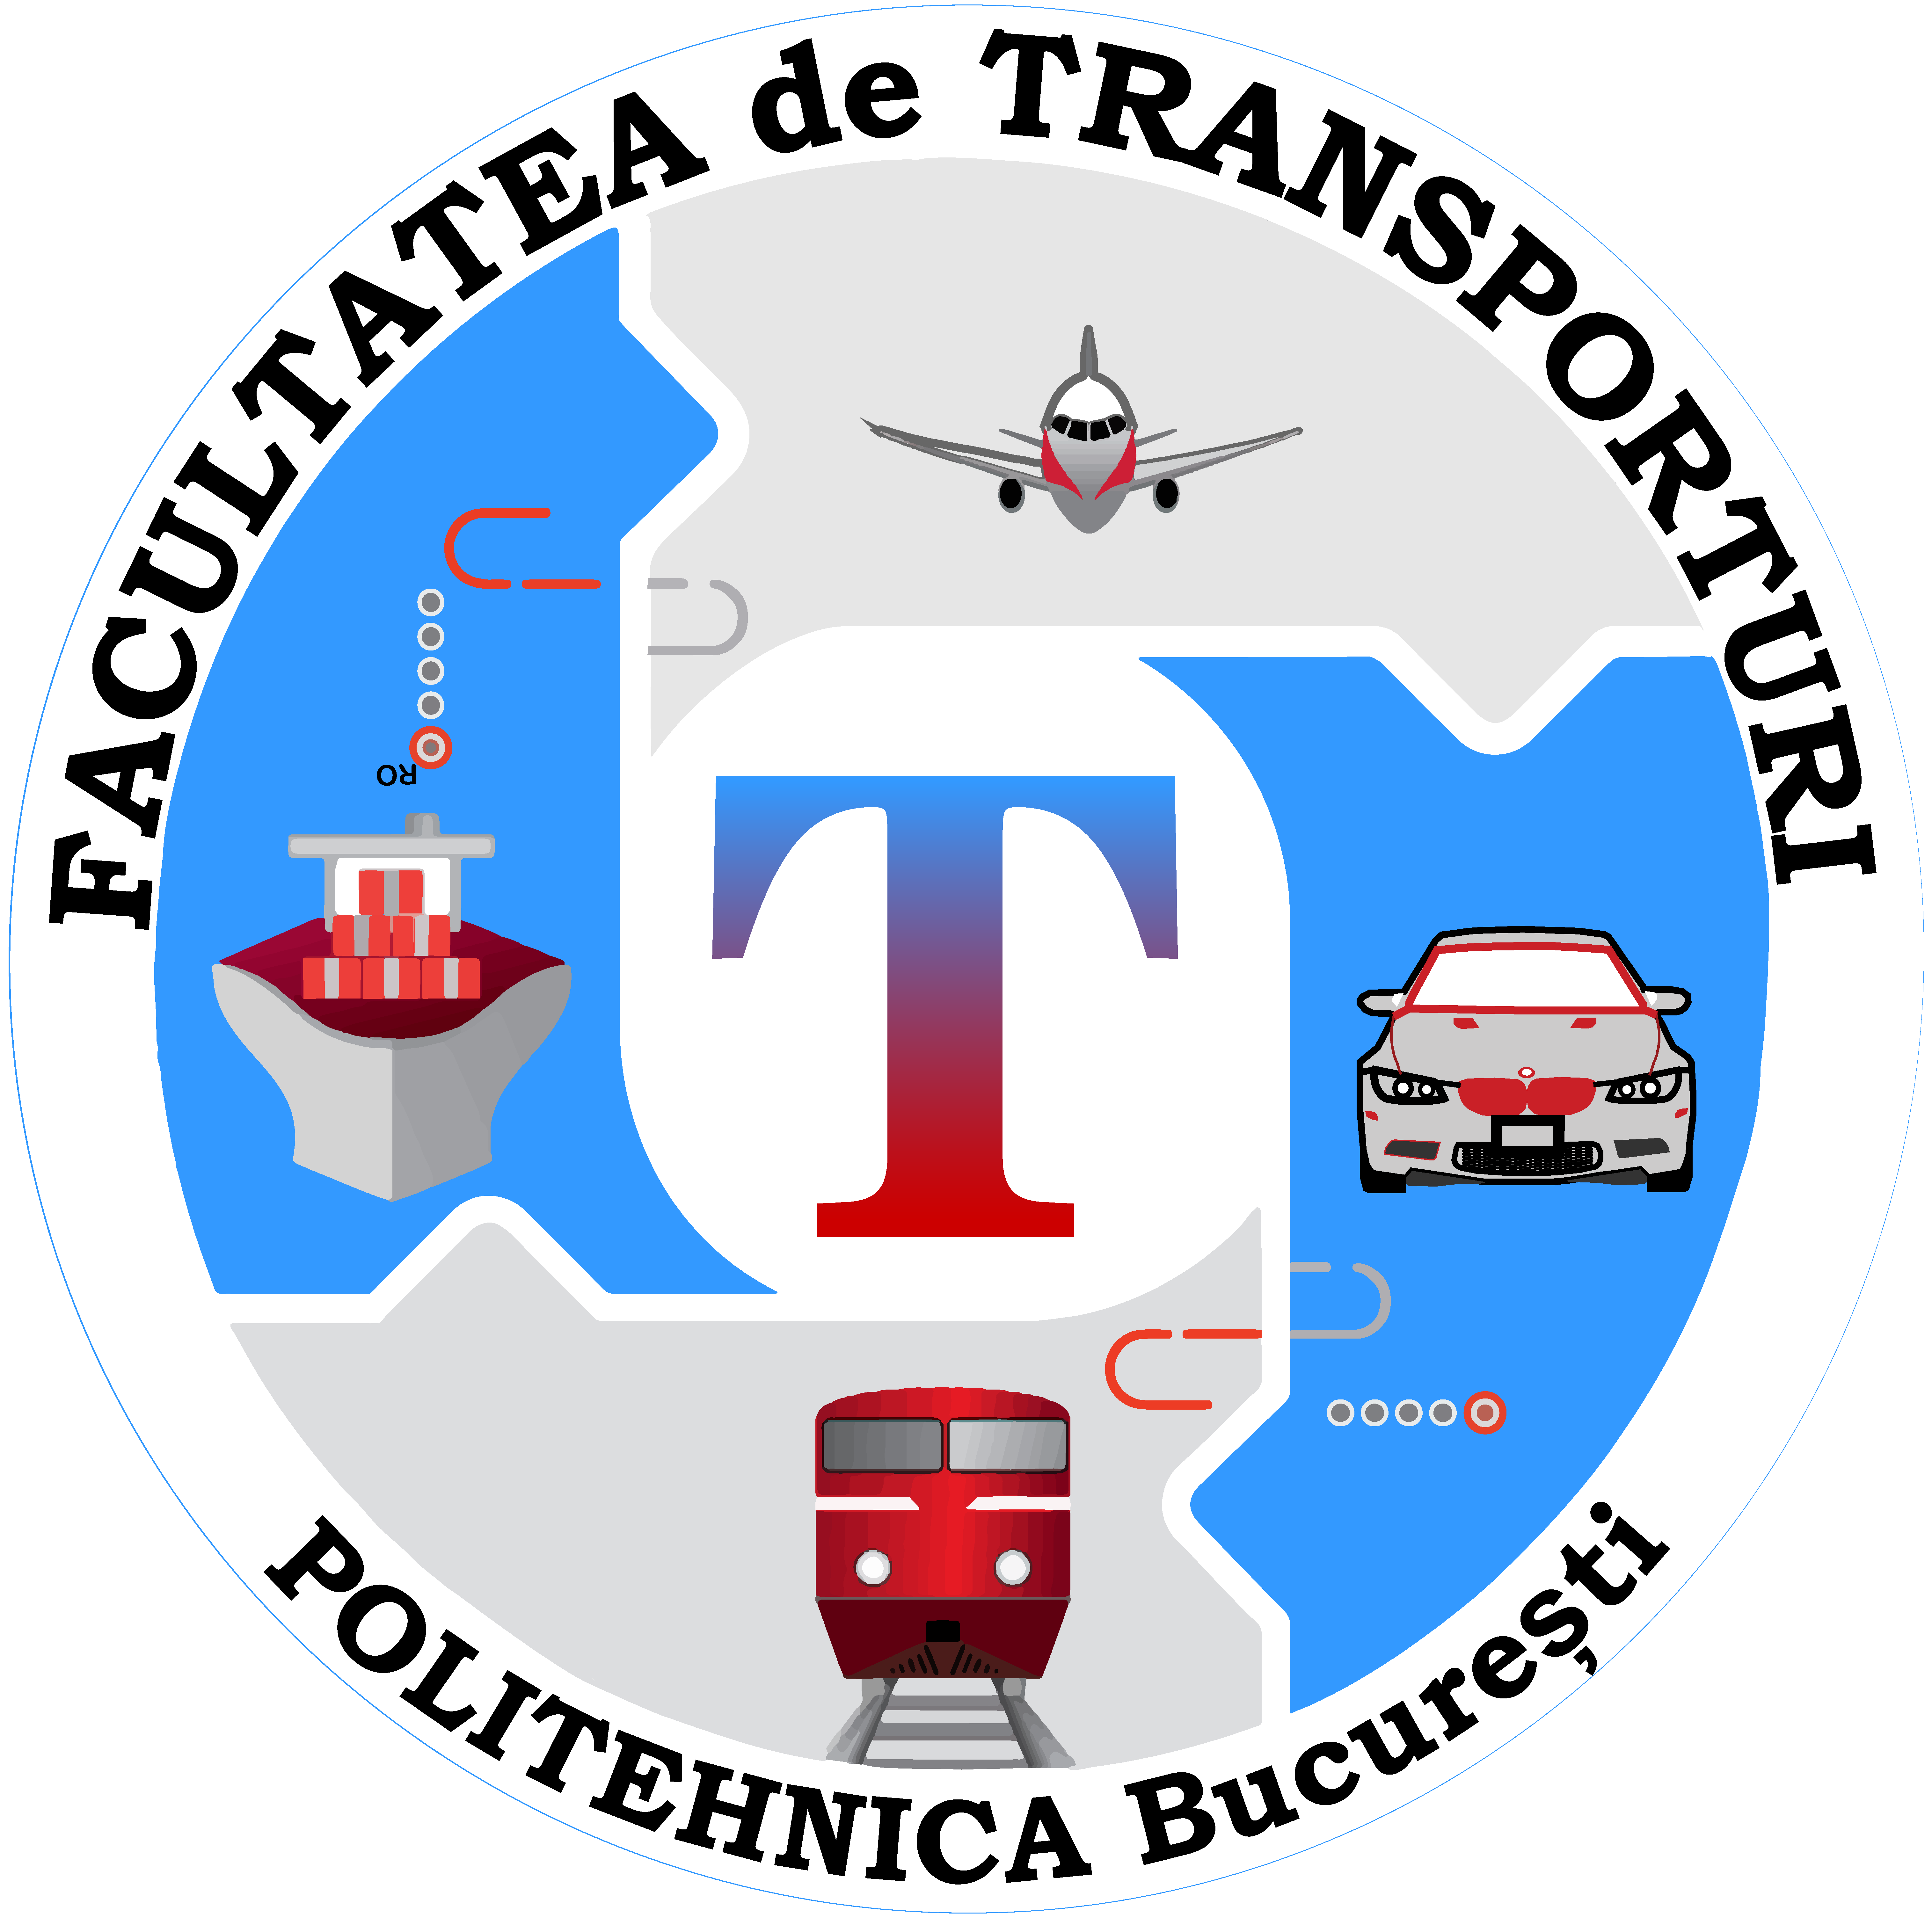 Transport Faculty